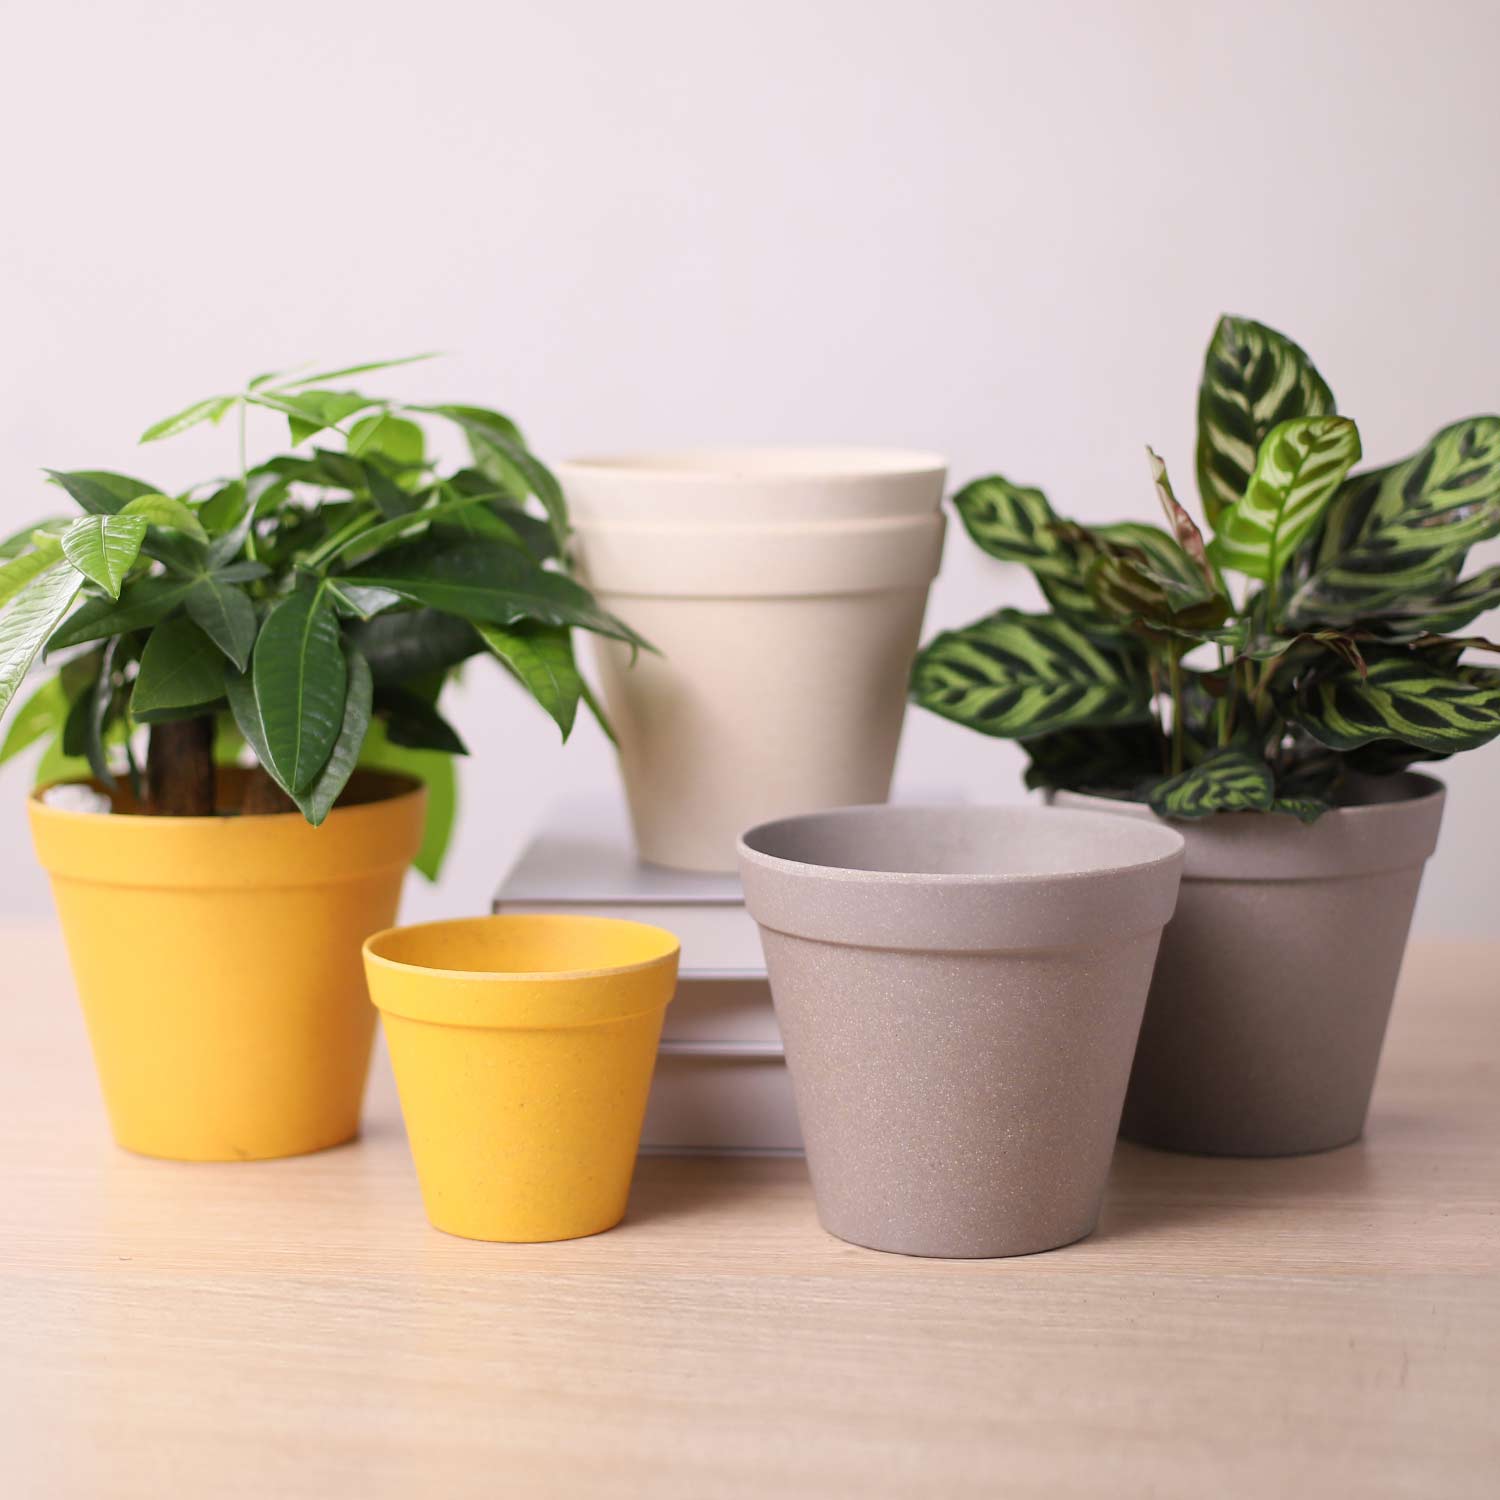 J&C Indoor plant pots planters for herbs ပန်းပင်အသေးစား သဘာဝပစ္စည်း တာရှည်ခံသည်။